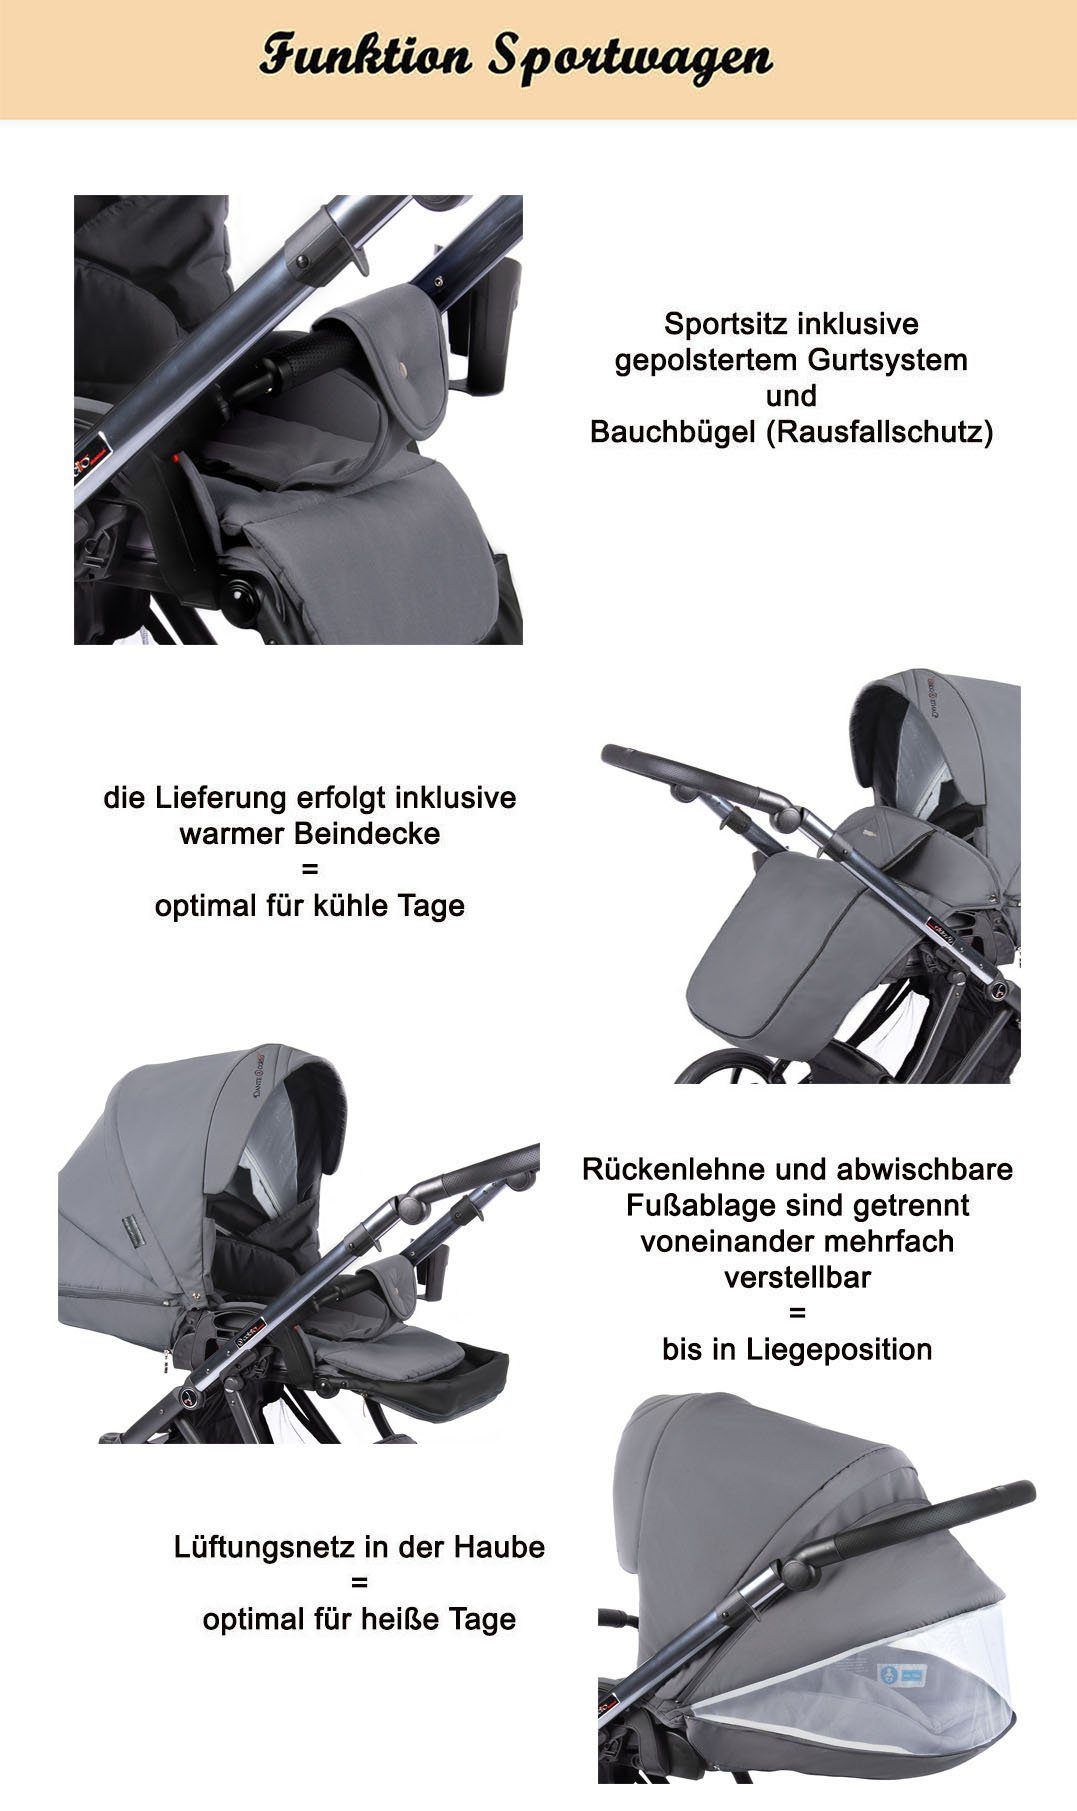 babies-on-wheels Kombi-Kinderwagen 2 in schwarz Teile 1 Dante Türkis Kinderwagen-Set in 11 Farben = 16 - - Gestell